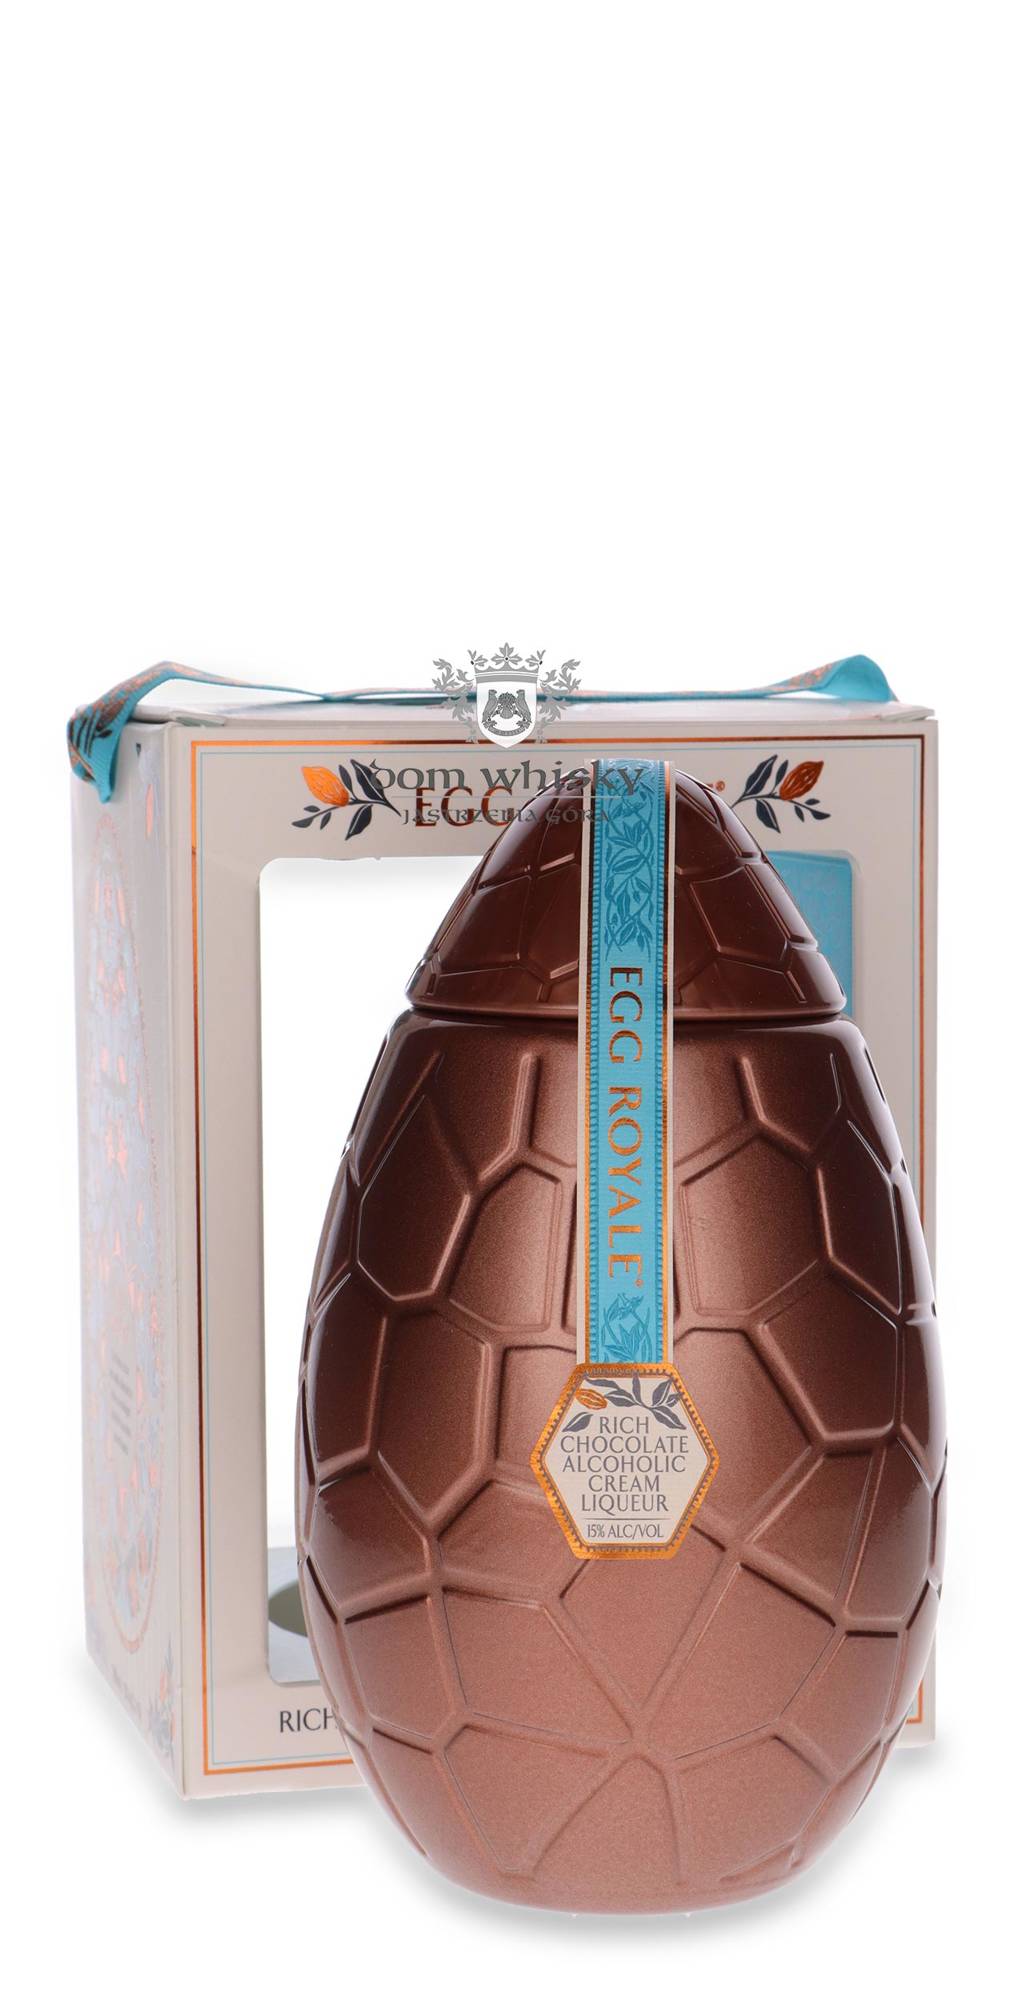 Egg Royale Chocolate 15% | / Liqueur Dom / Cream 0,7l Whisky